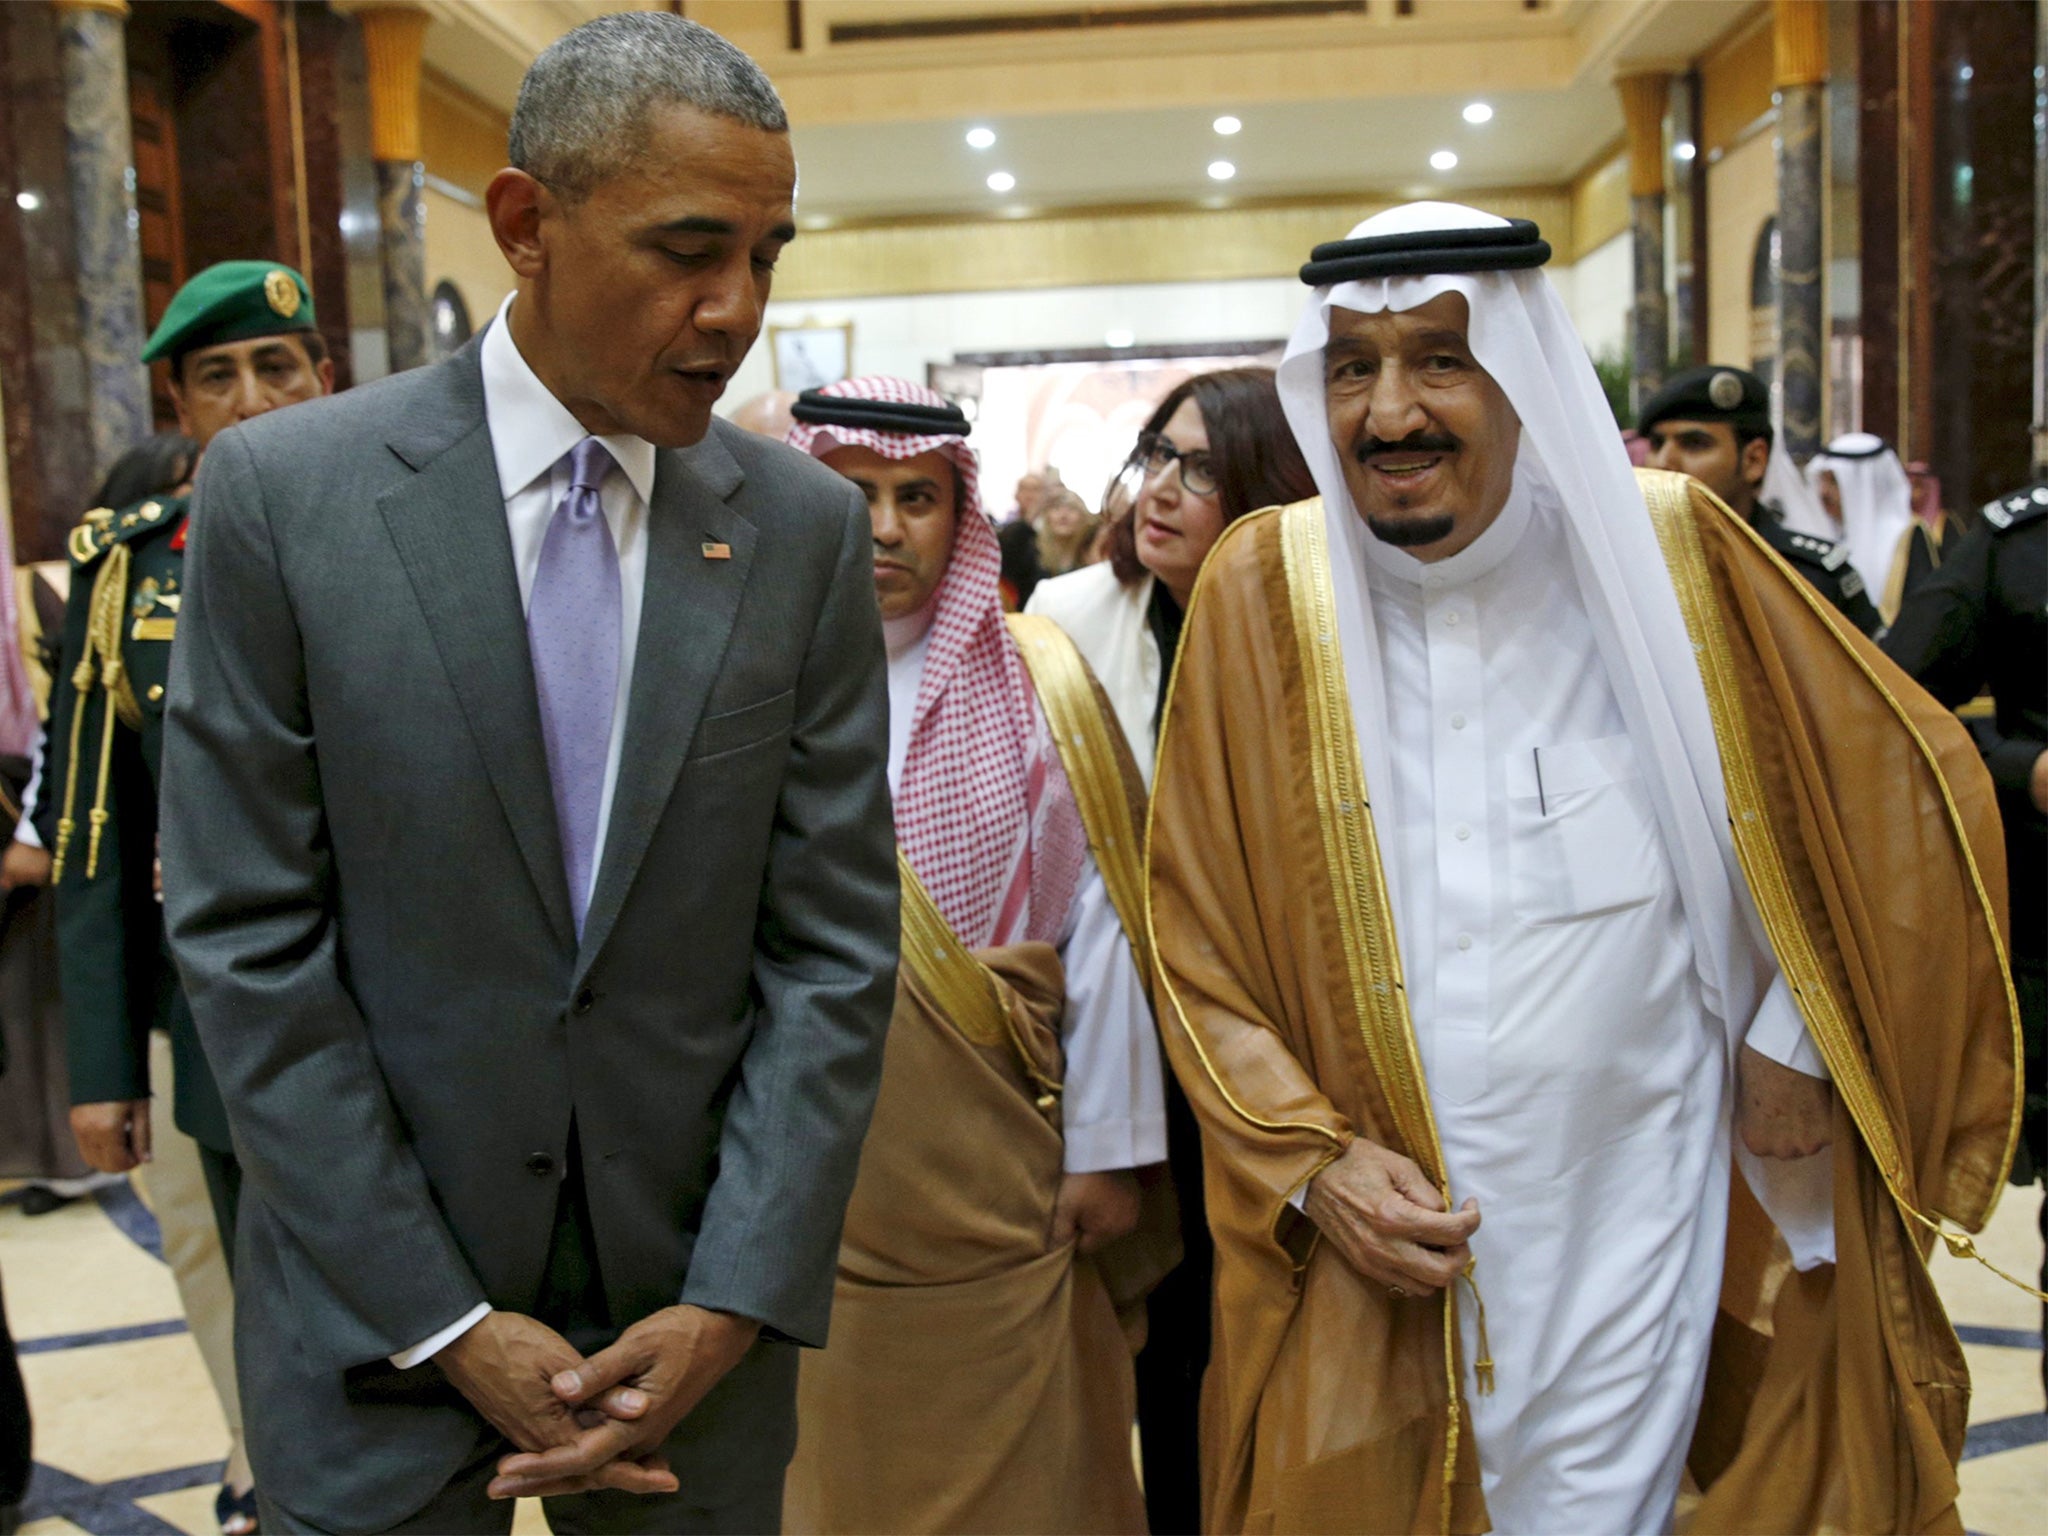 President Obama walks with Saudi King Salman at Erga Palace upon arriving for a summit meeting in Riyadh